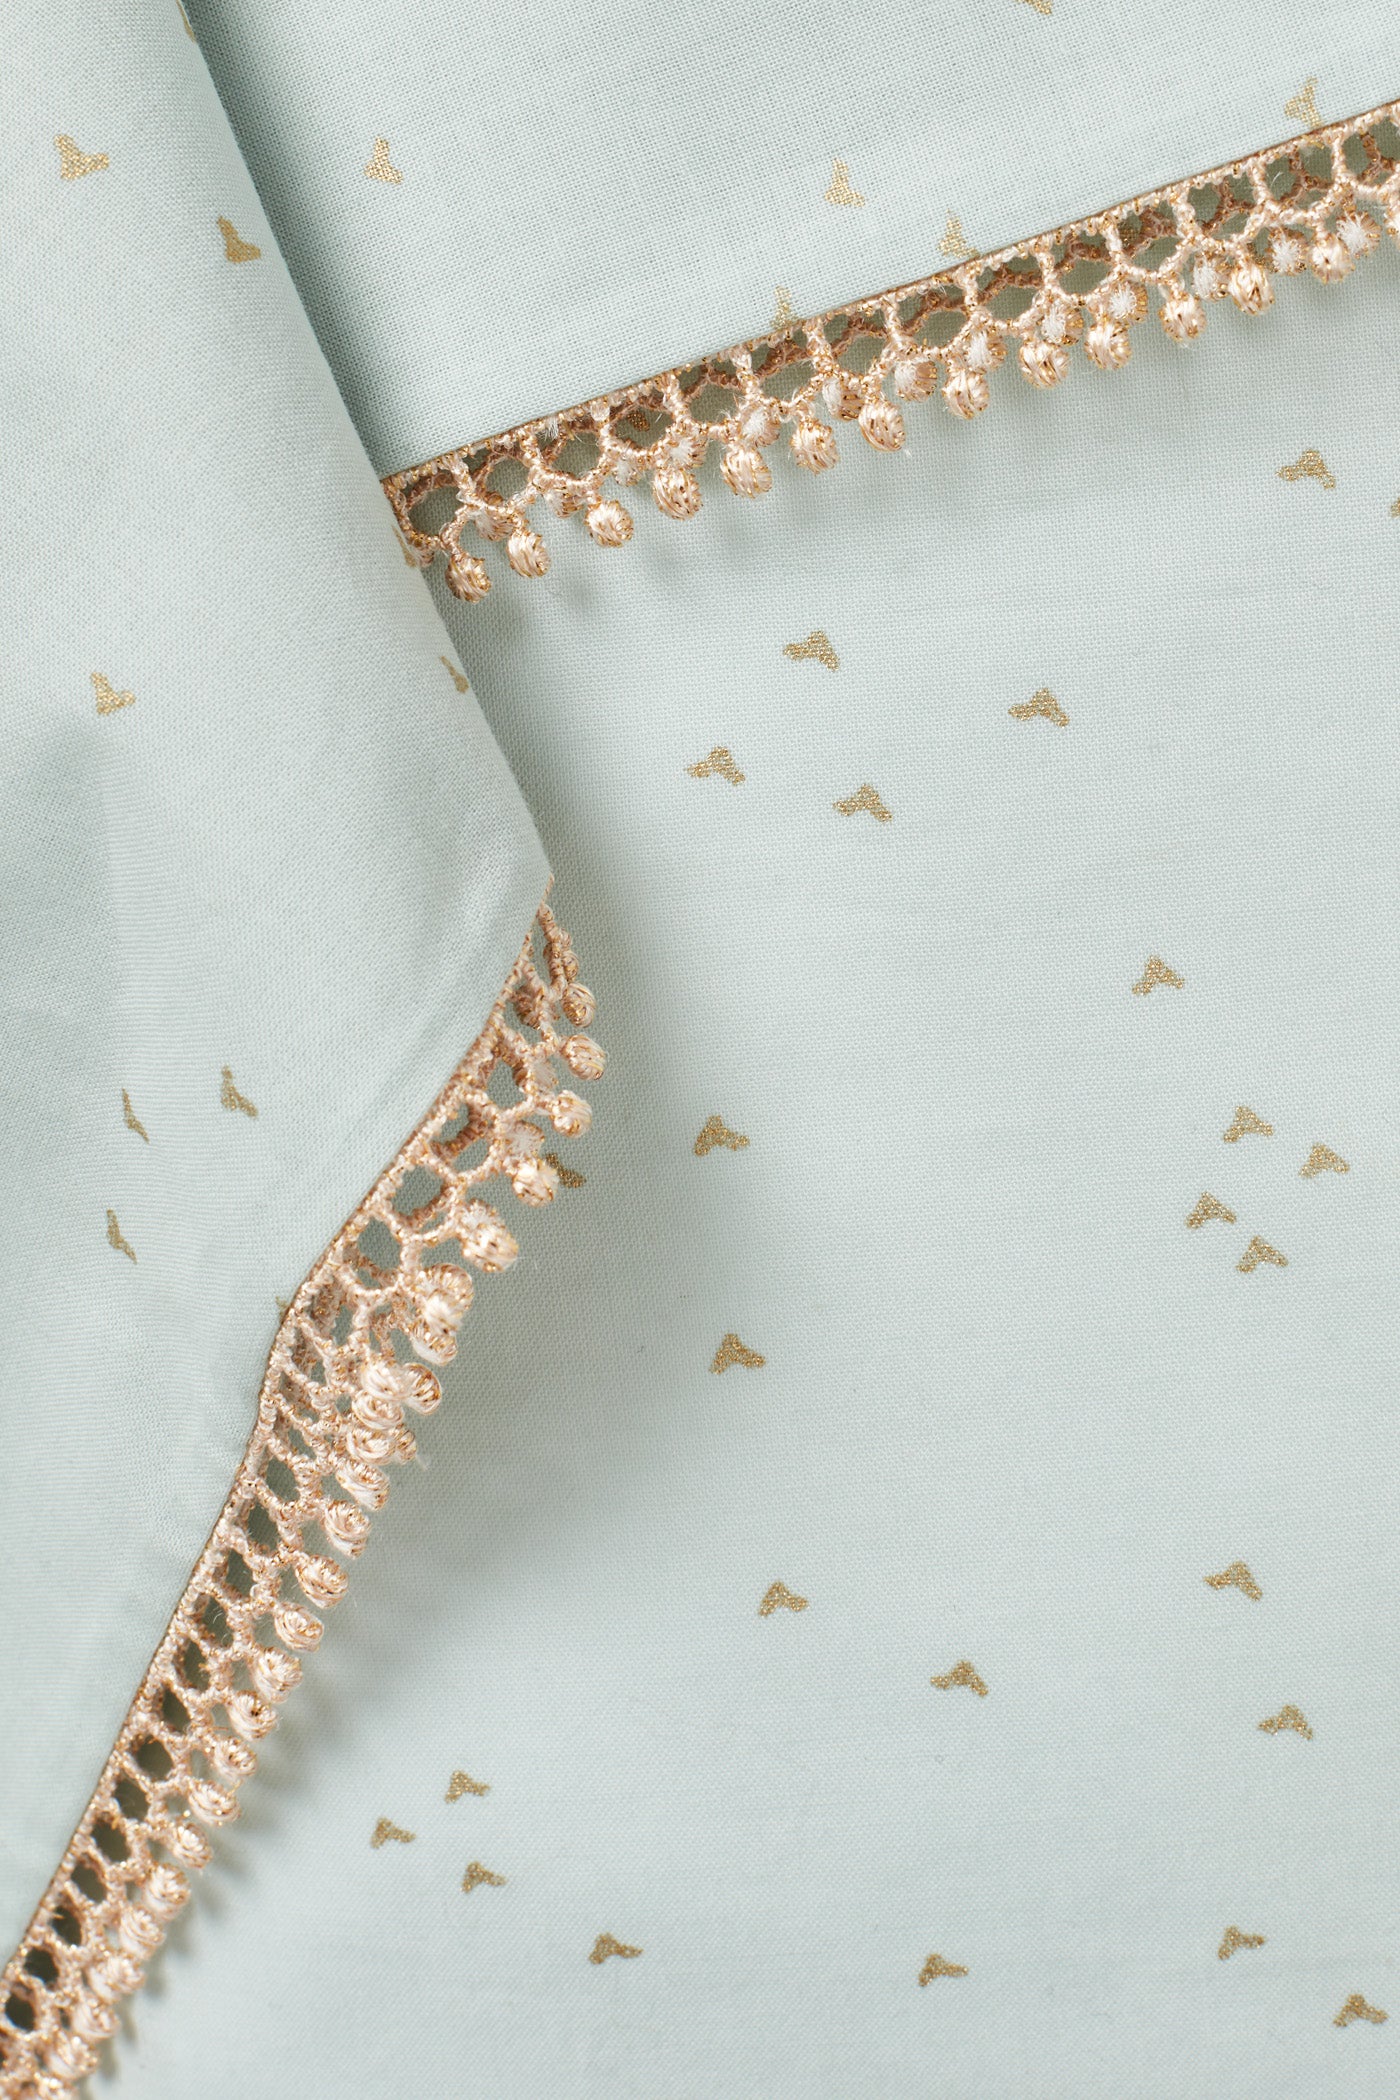 Mint with Gold Dots Duvet Cover Set duvet for Single Bed